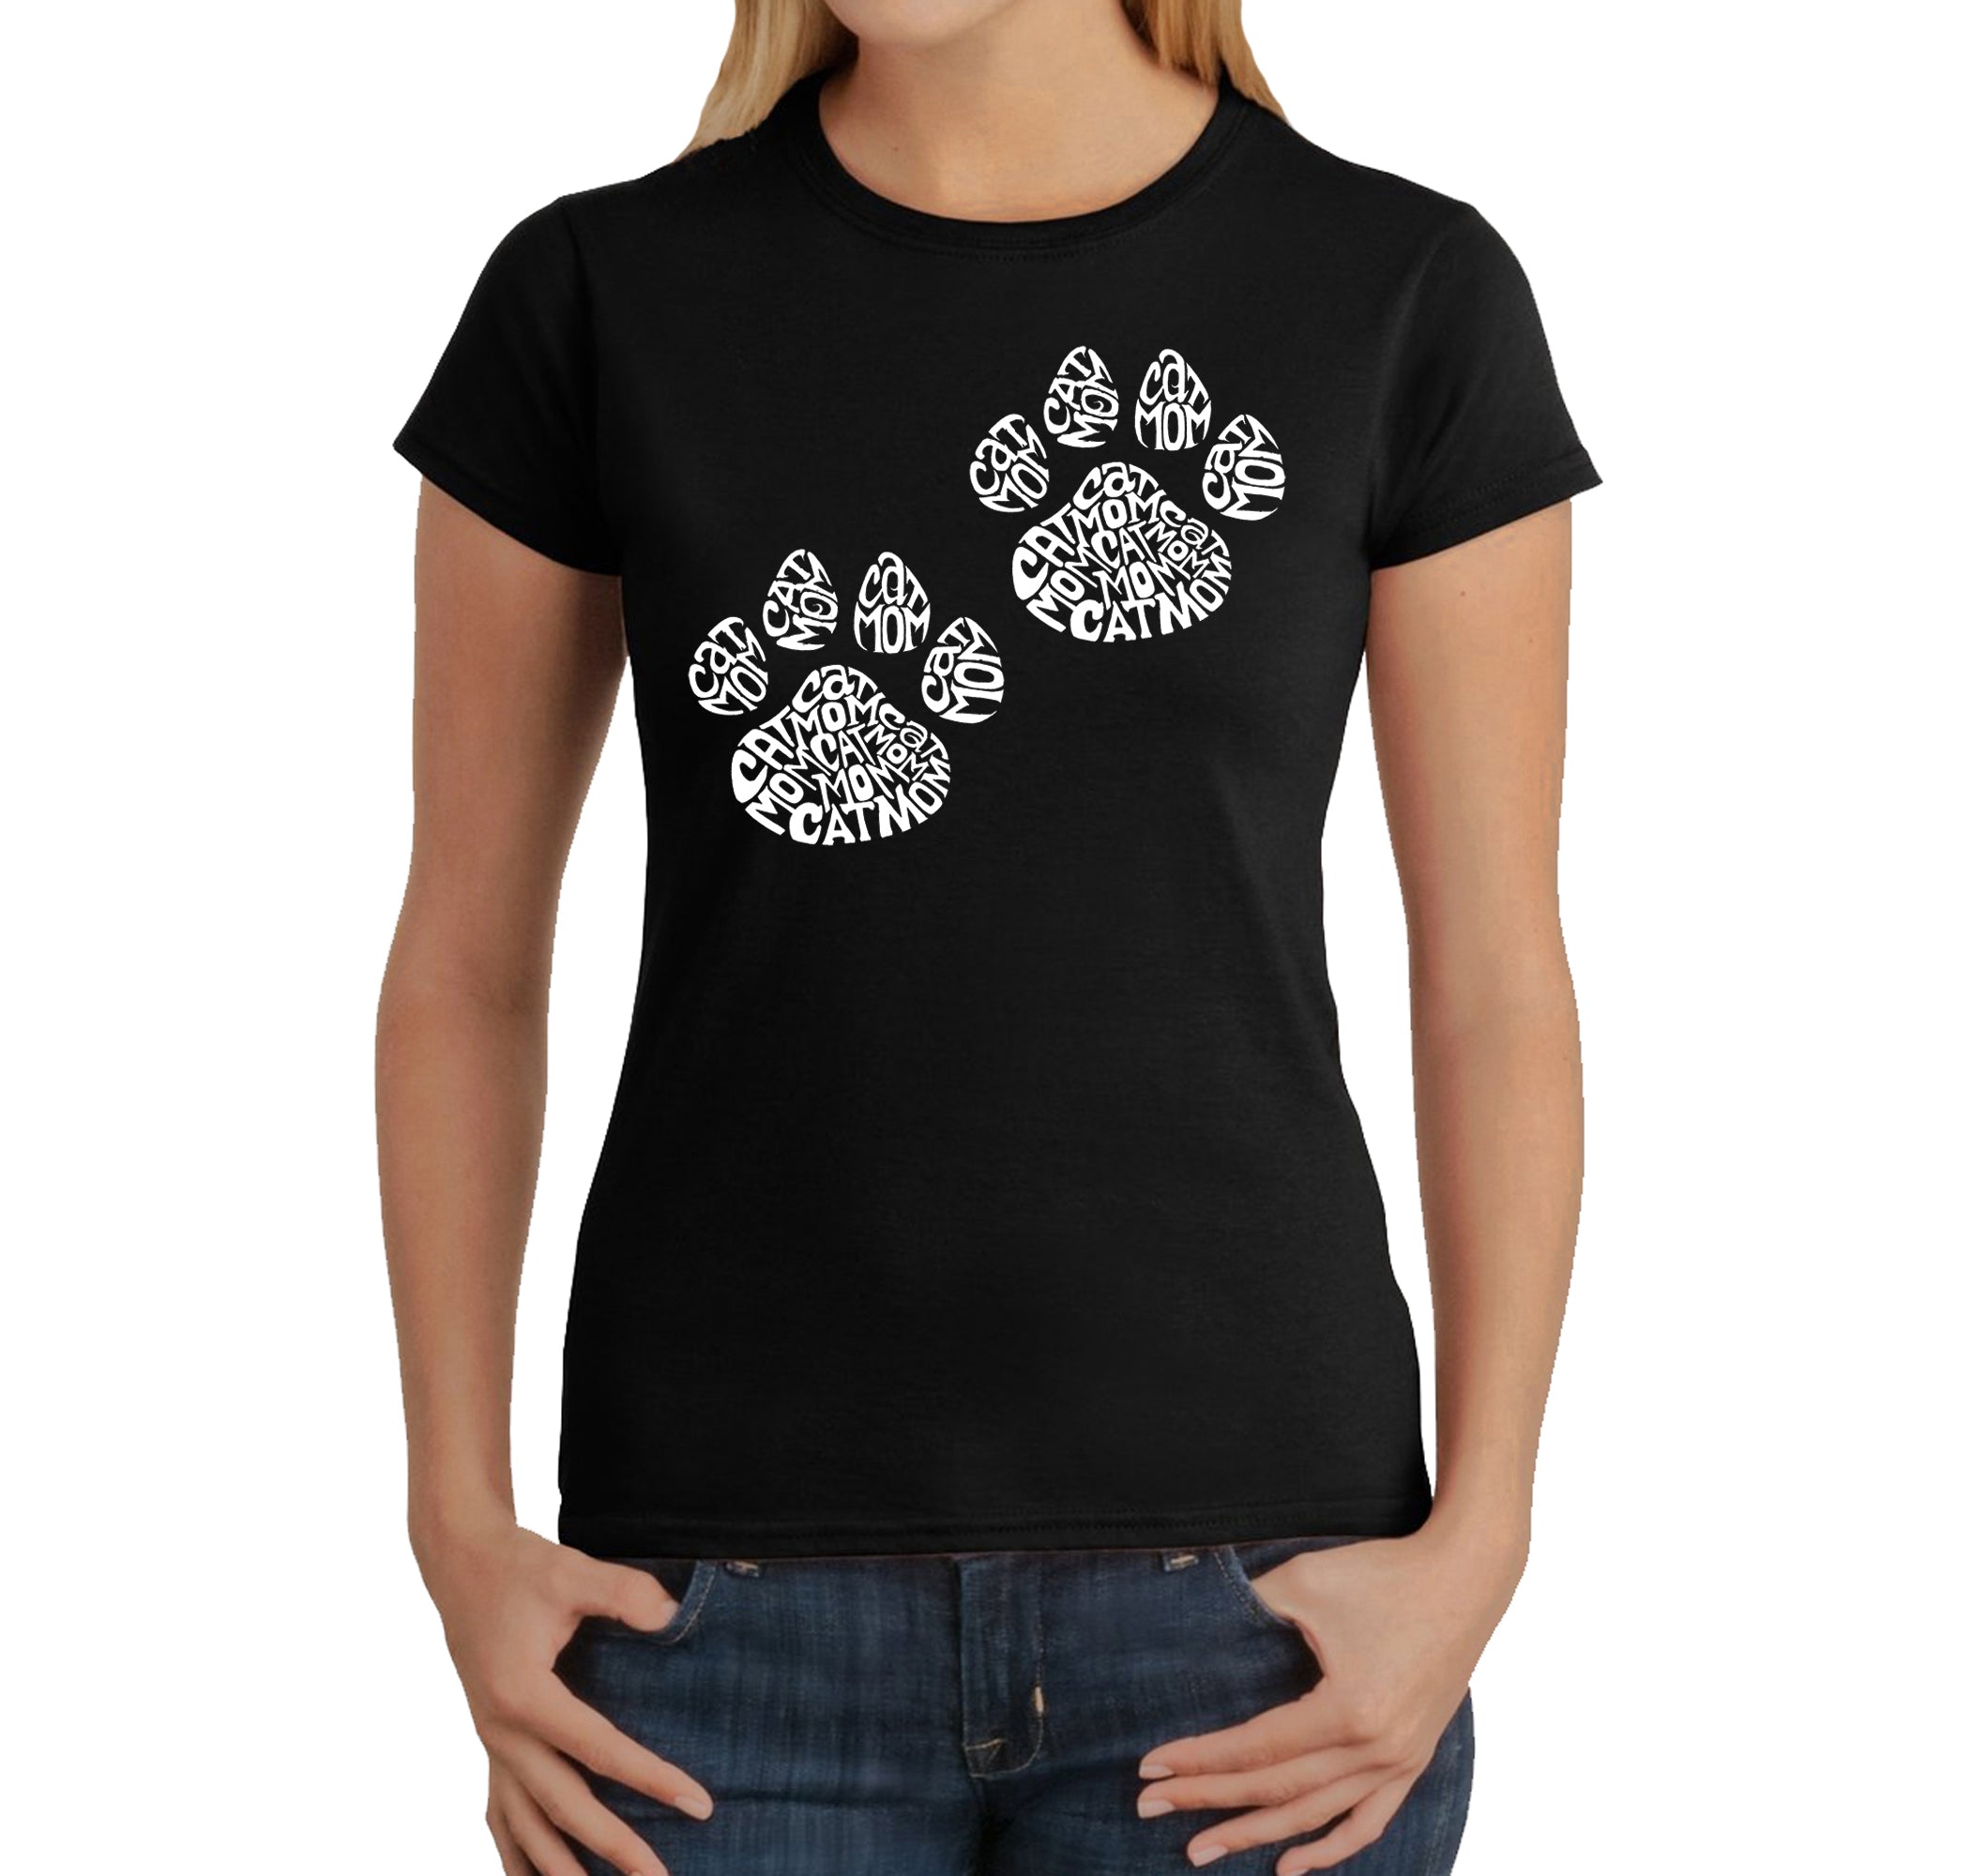 Cat Mom - Women's Word Art T-Shirt - Kelly - XS